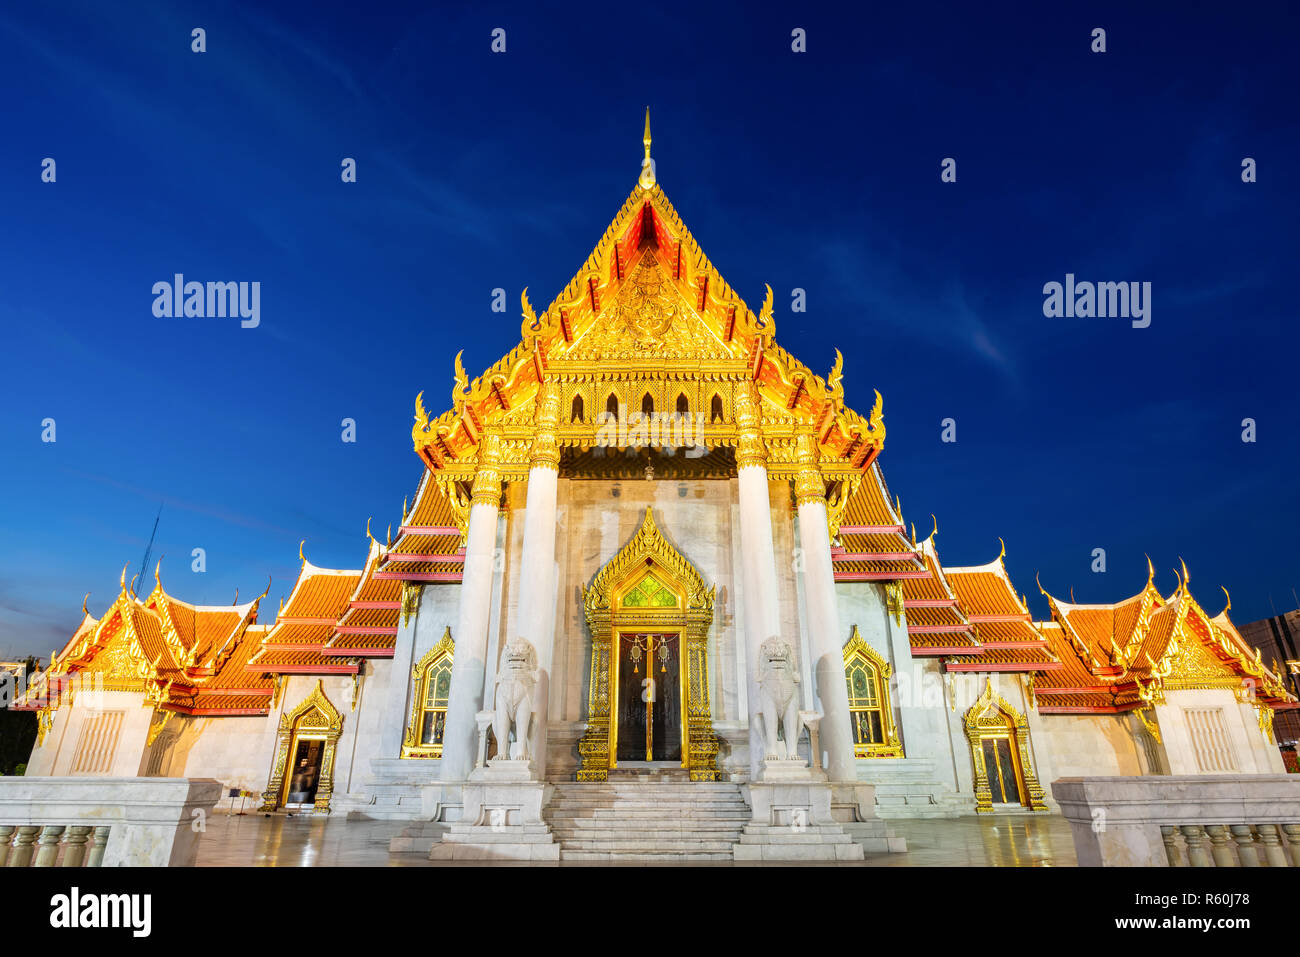 Thai Marble Temple (Wat Benchamabophit Dusitvanaram) night scene at dusk in Bangkok, Thailand Stock Photo